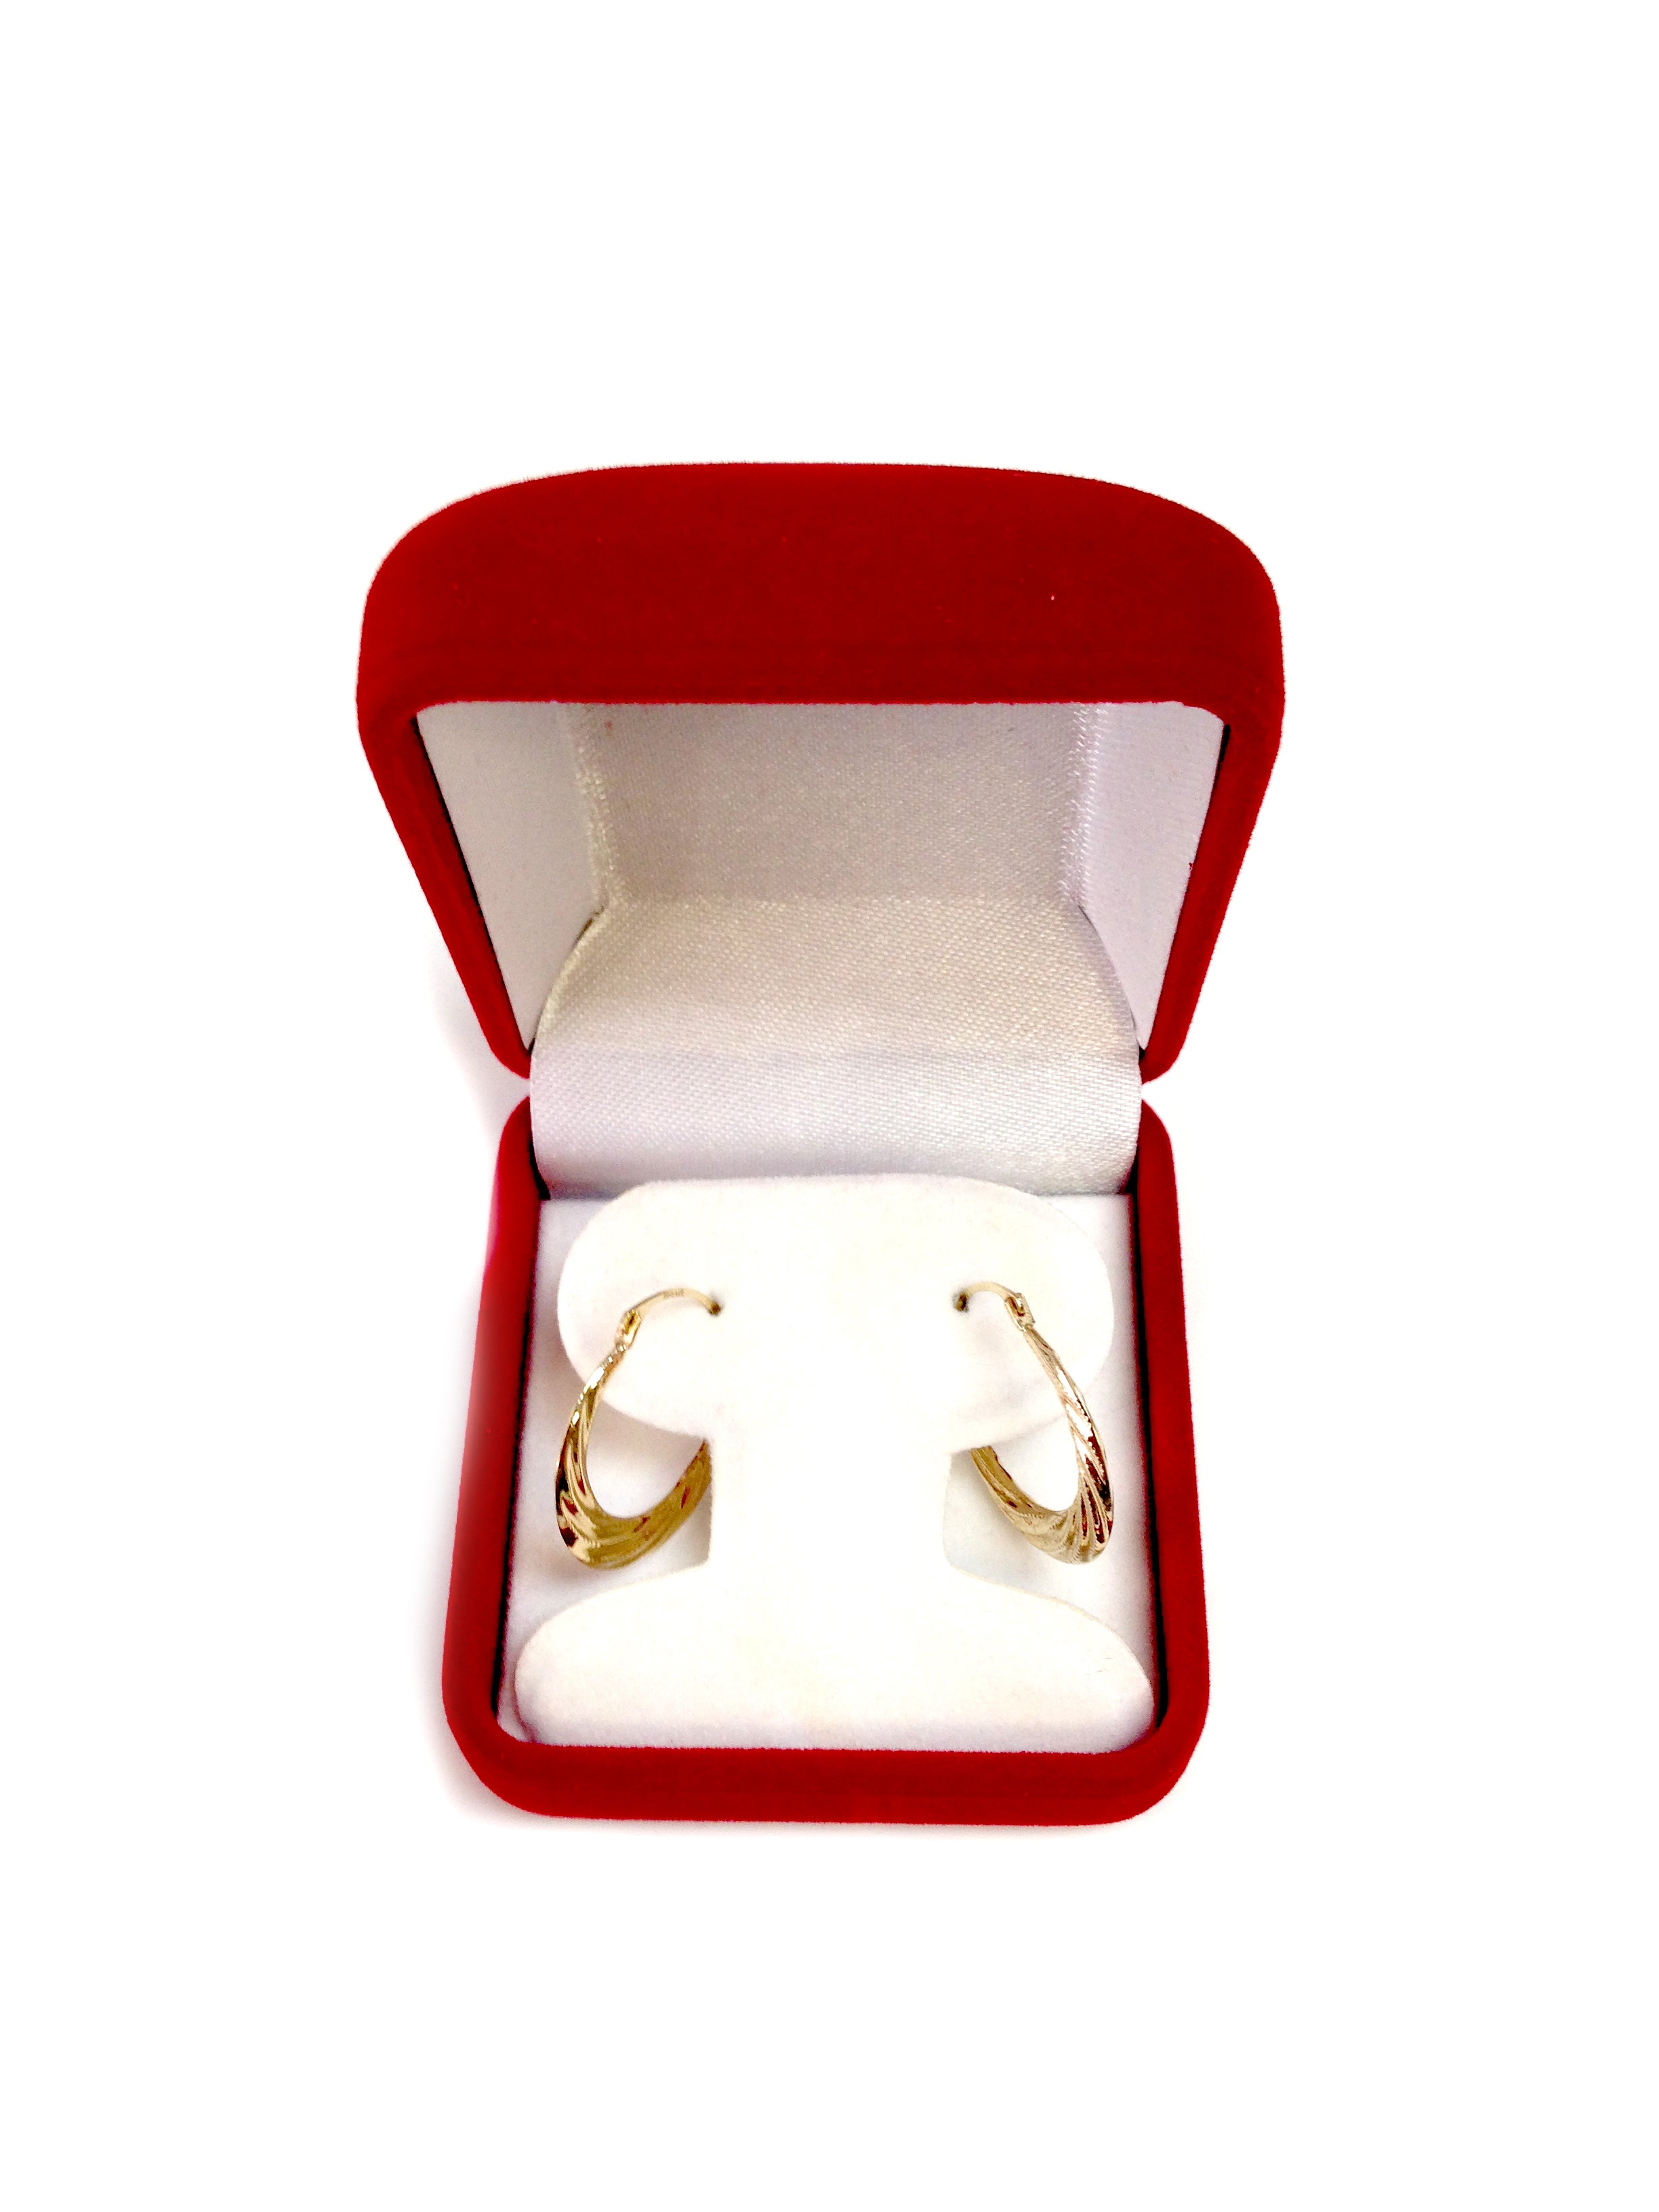 10k Yellow Gold Swirl Textured Graduated Round Hoop Earrings, Diameter 20mm fine designer jewelry for men and women